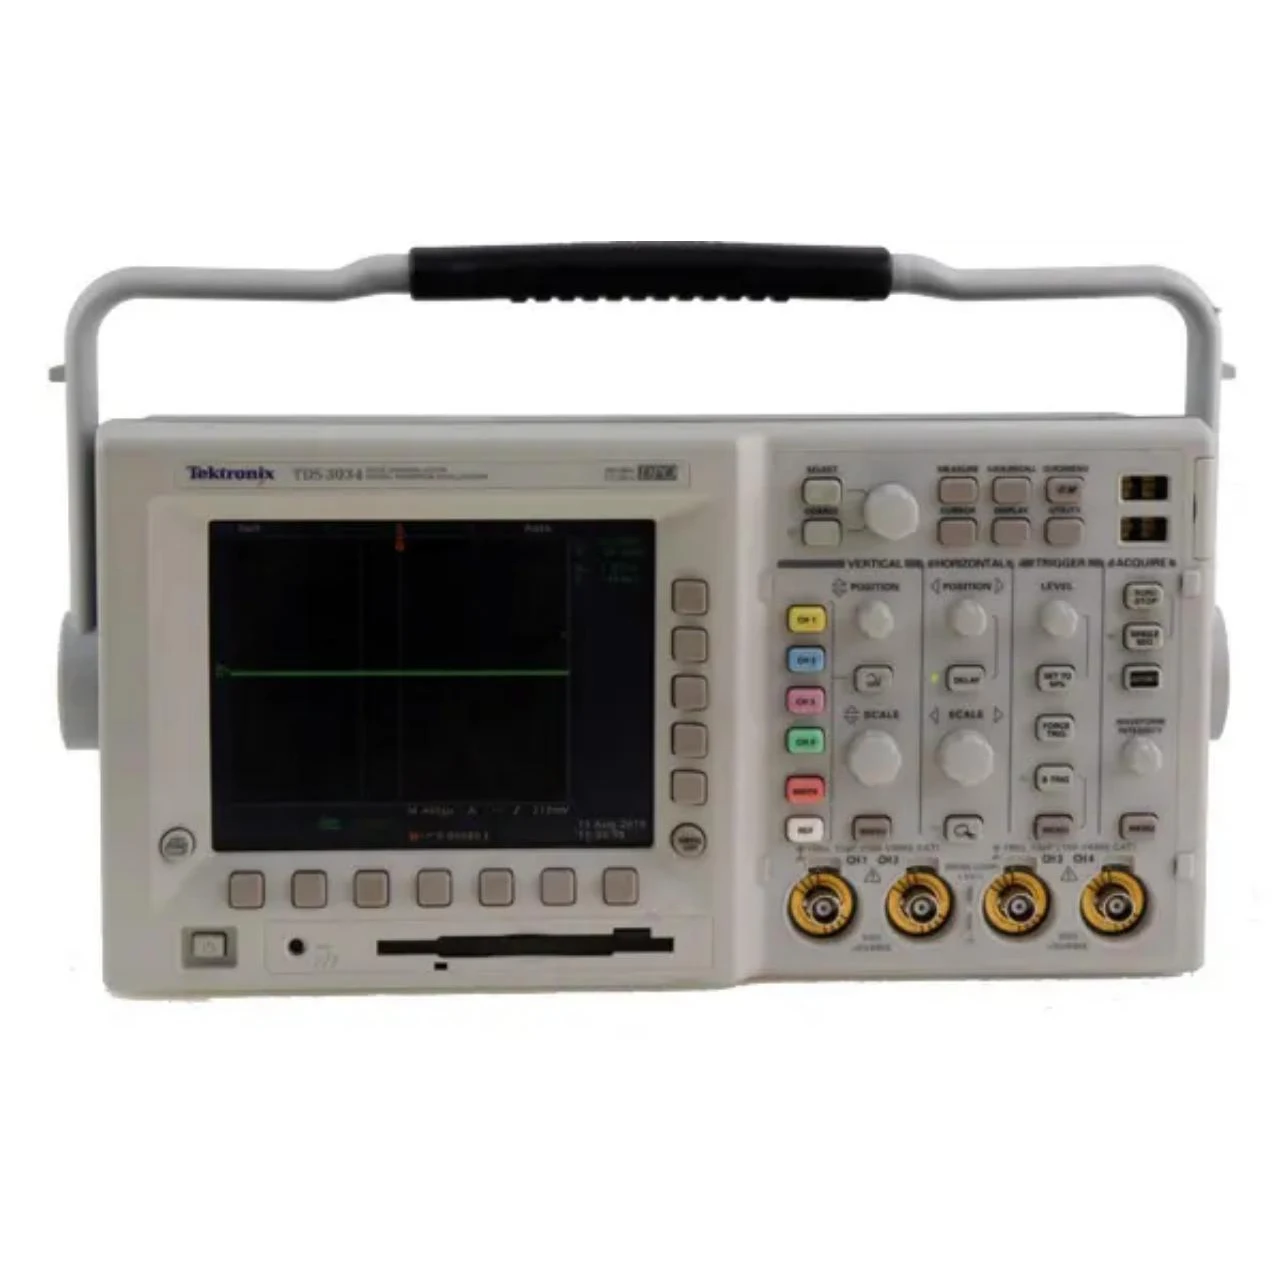 

Tektronix TDS 3034 300MHz DPO Four Channel Color Digital Phosphor Oscilloscope